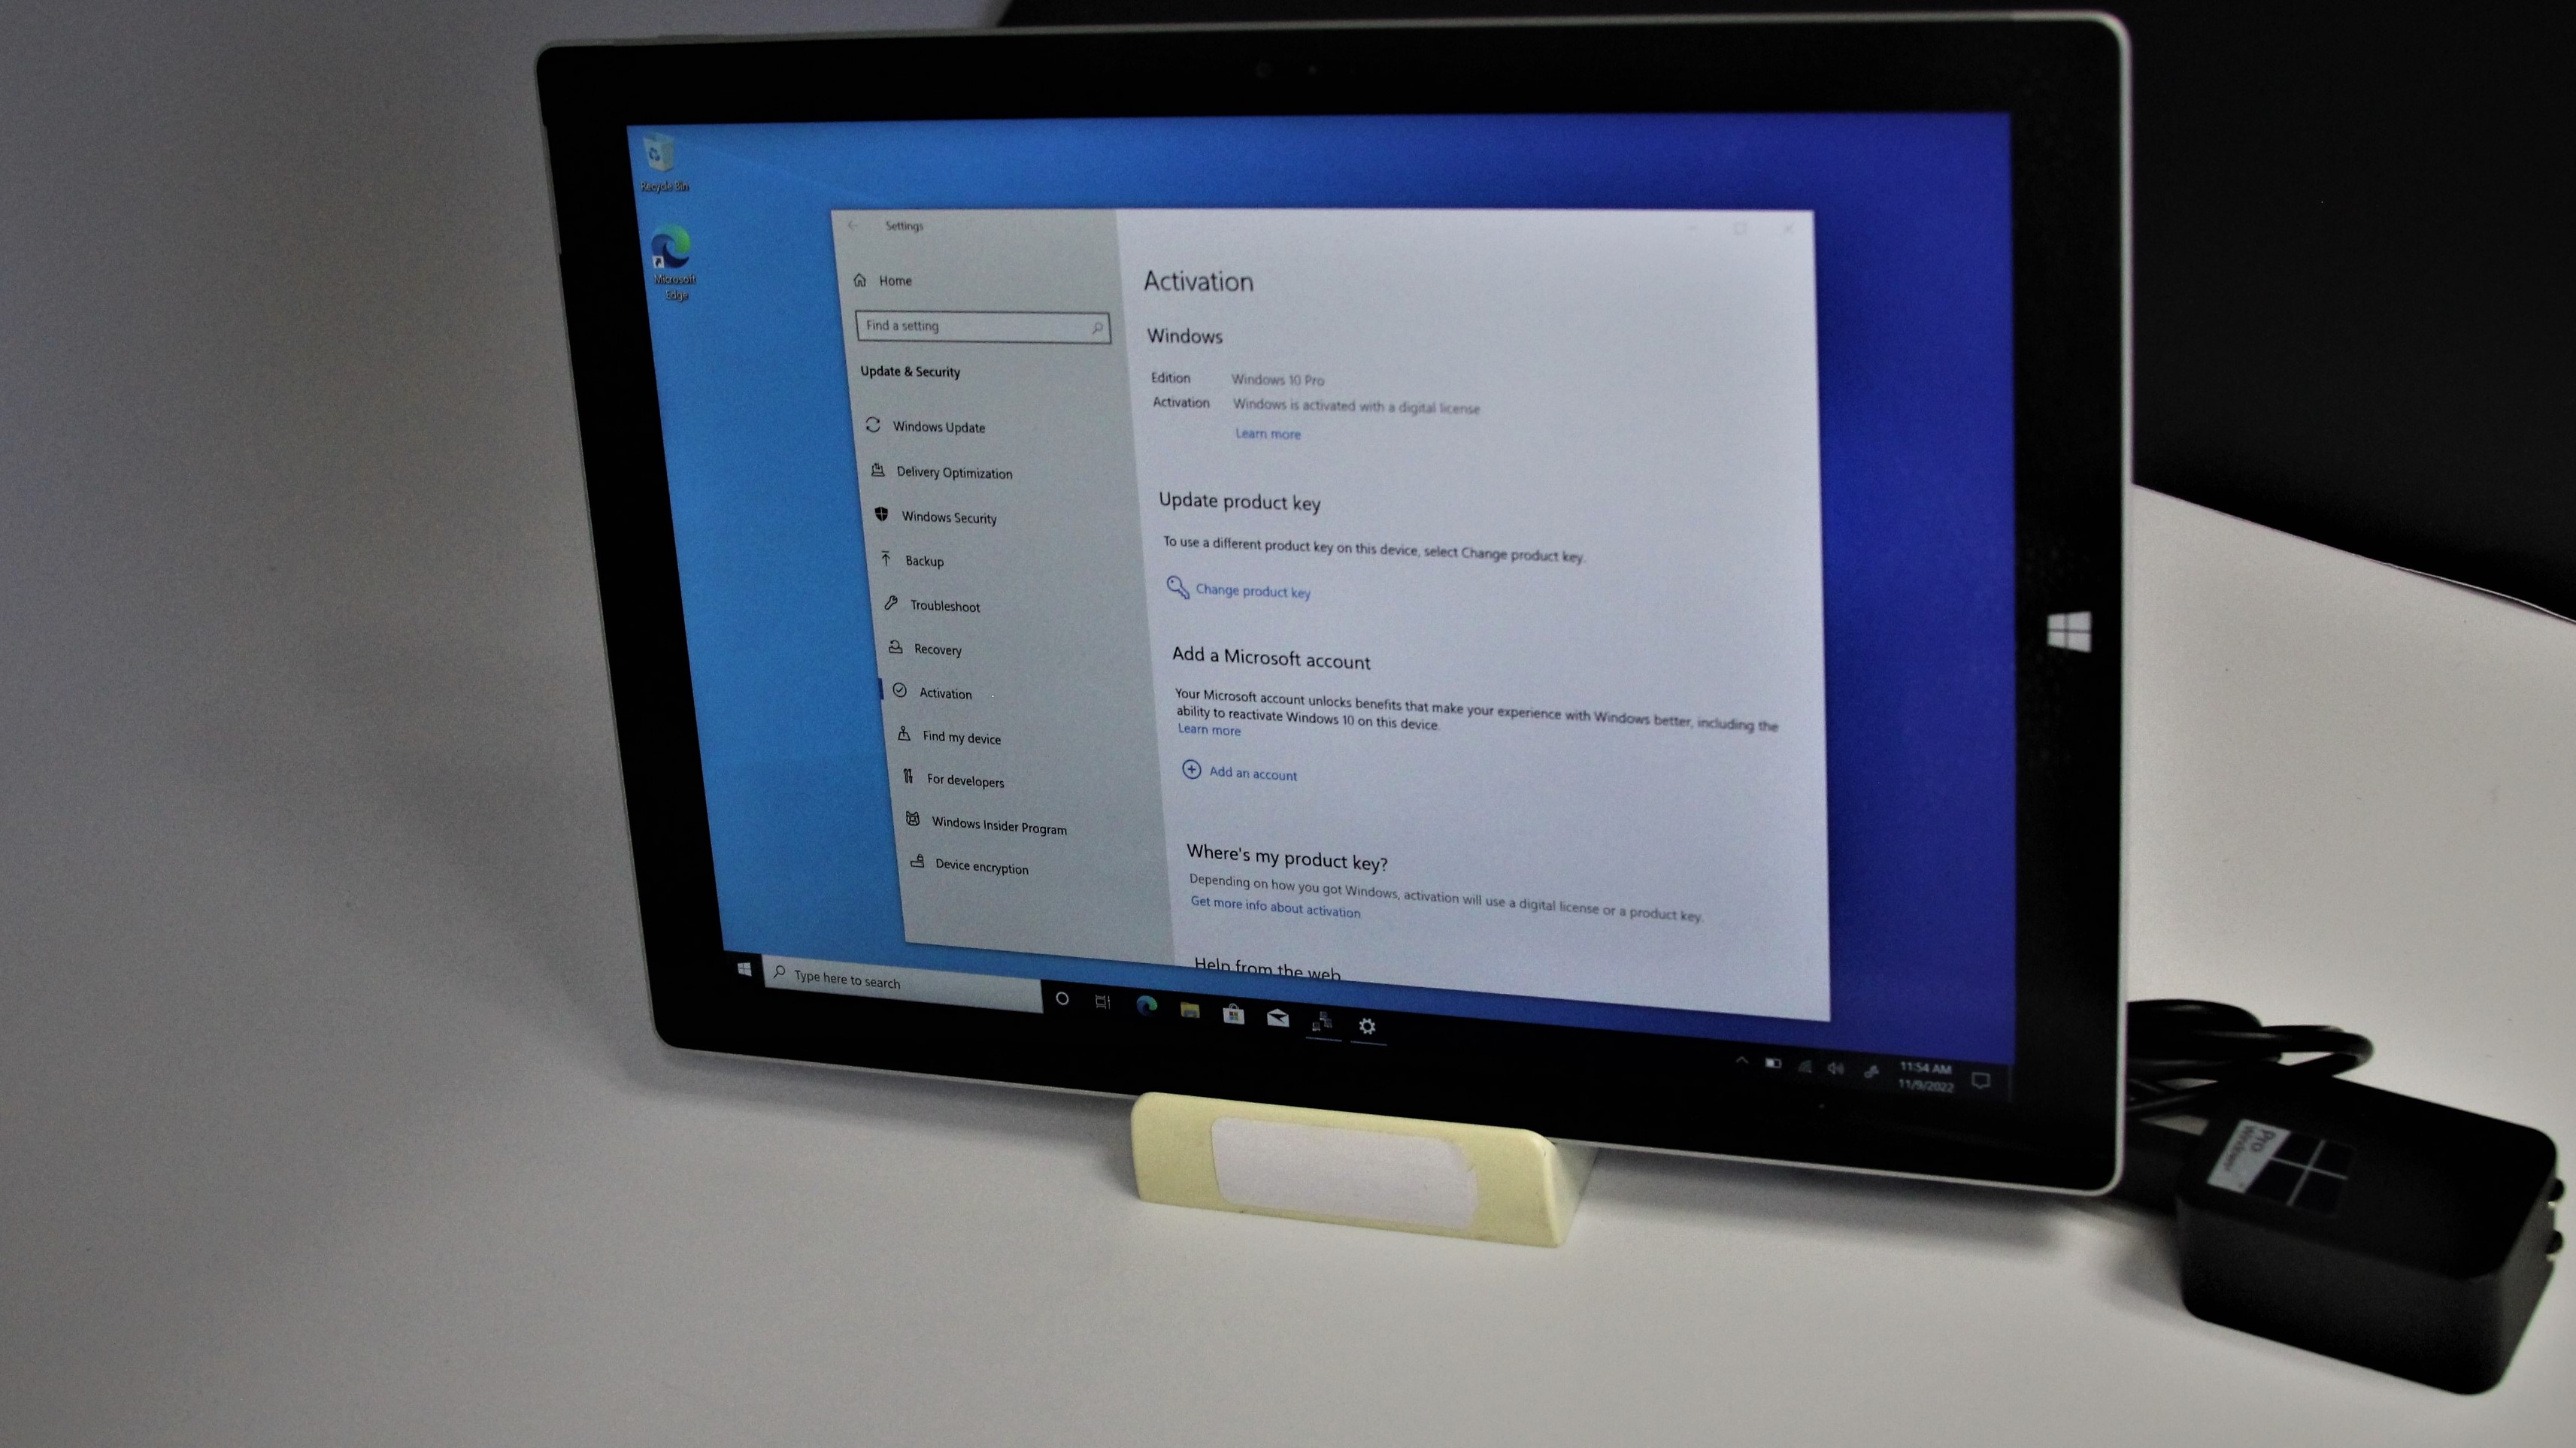 Microsoft Surface Pro 3 Intel I5-4300U 1.90GHZ 4GB RAM 128GB SSD Win 10 Pro